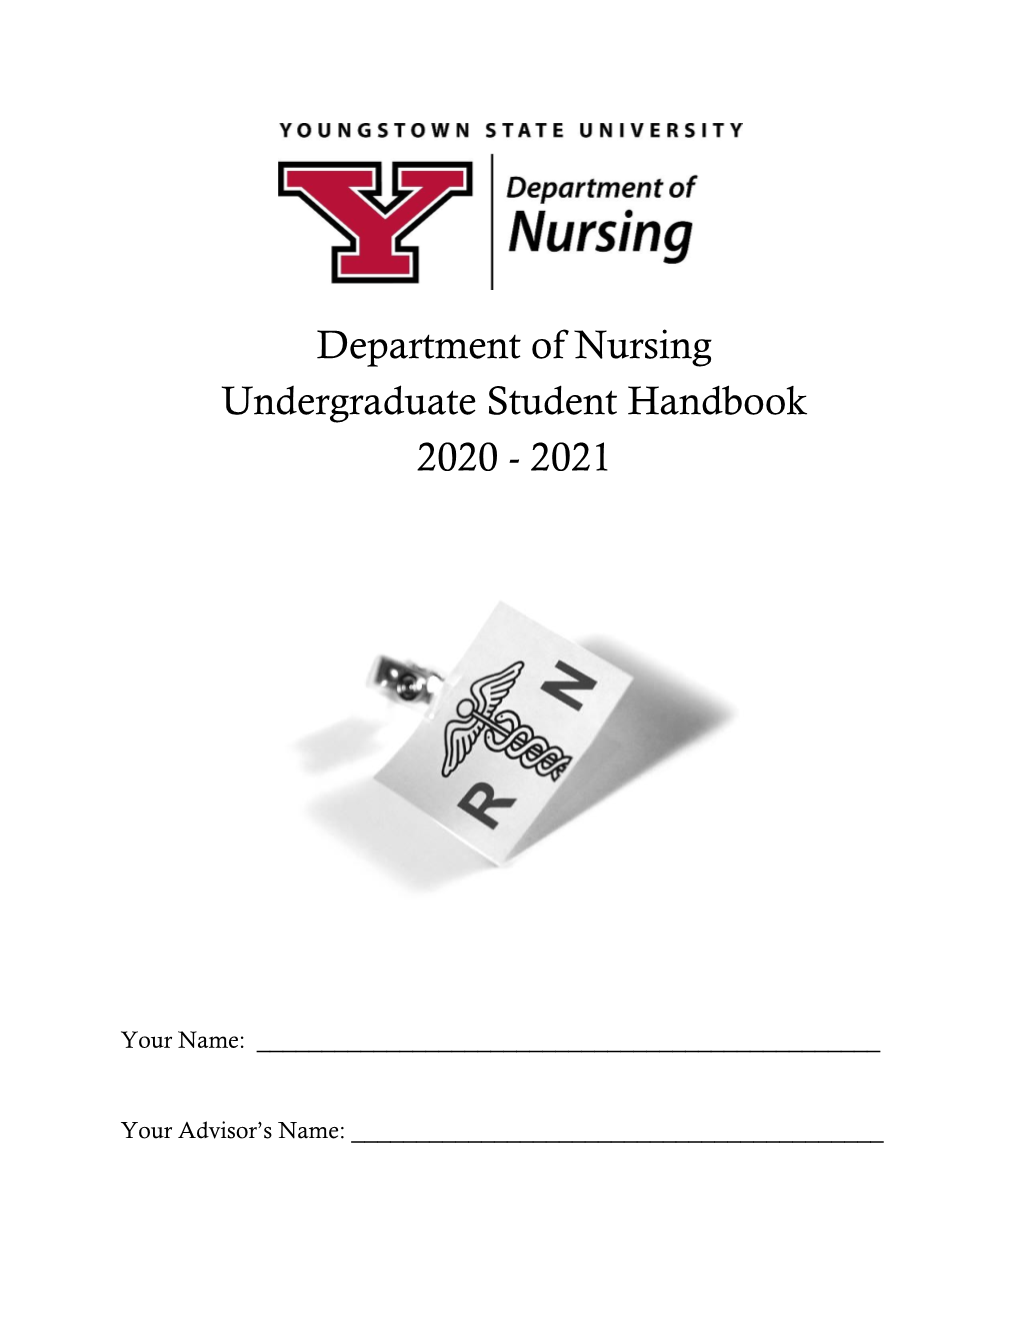 Department of Nursing Undergraduate Student Handbook 2020 - 2021